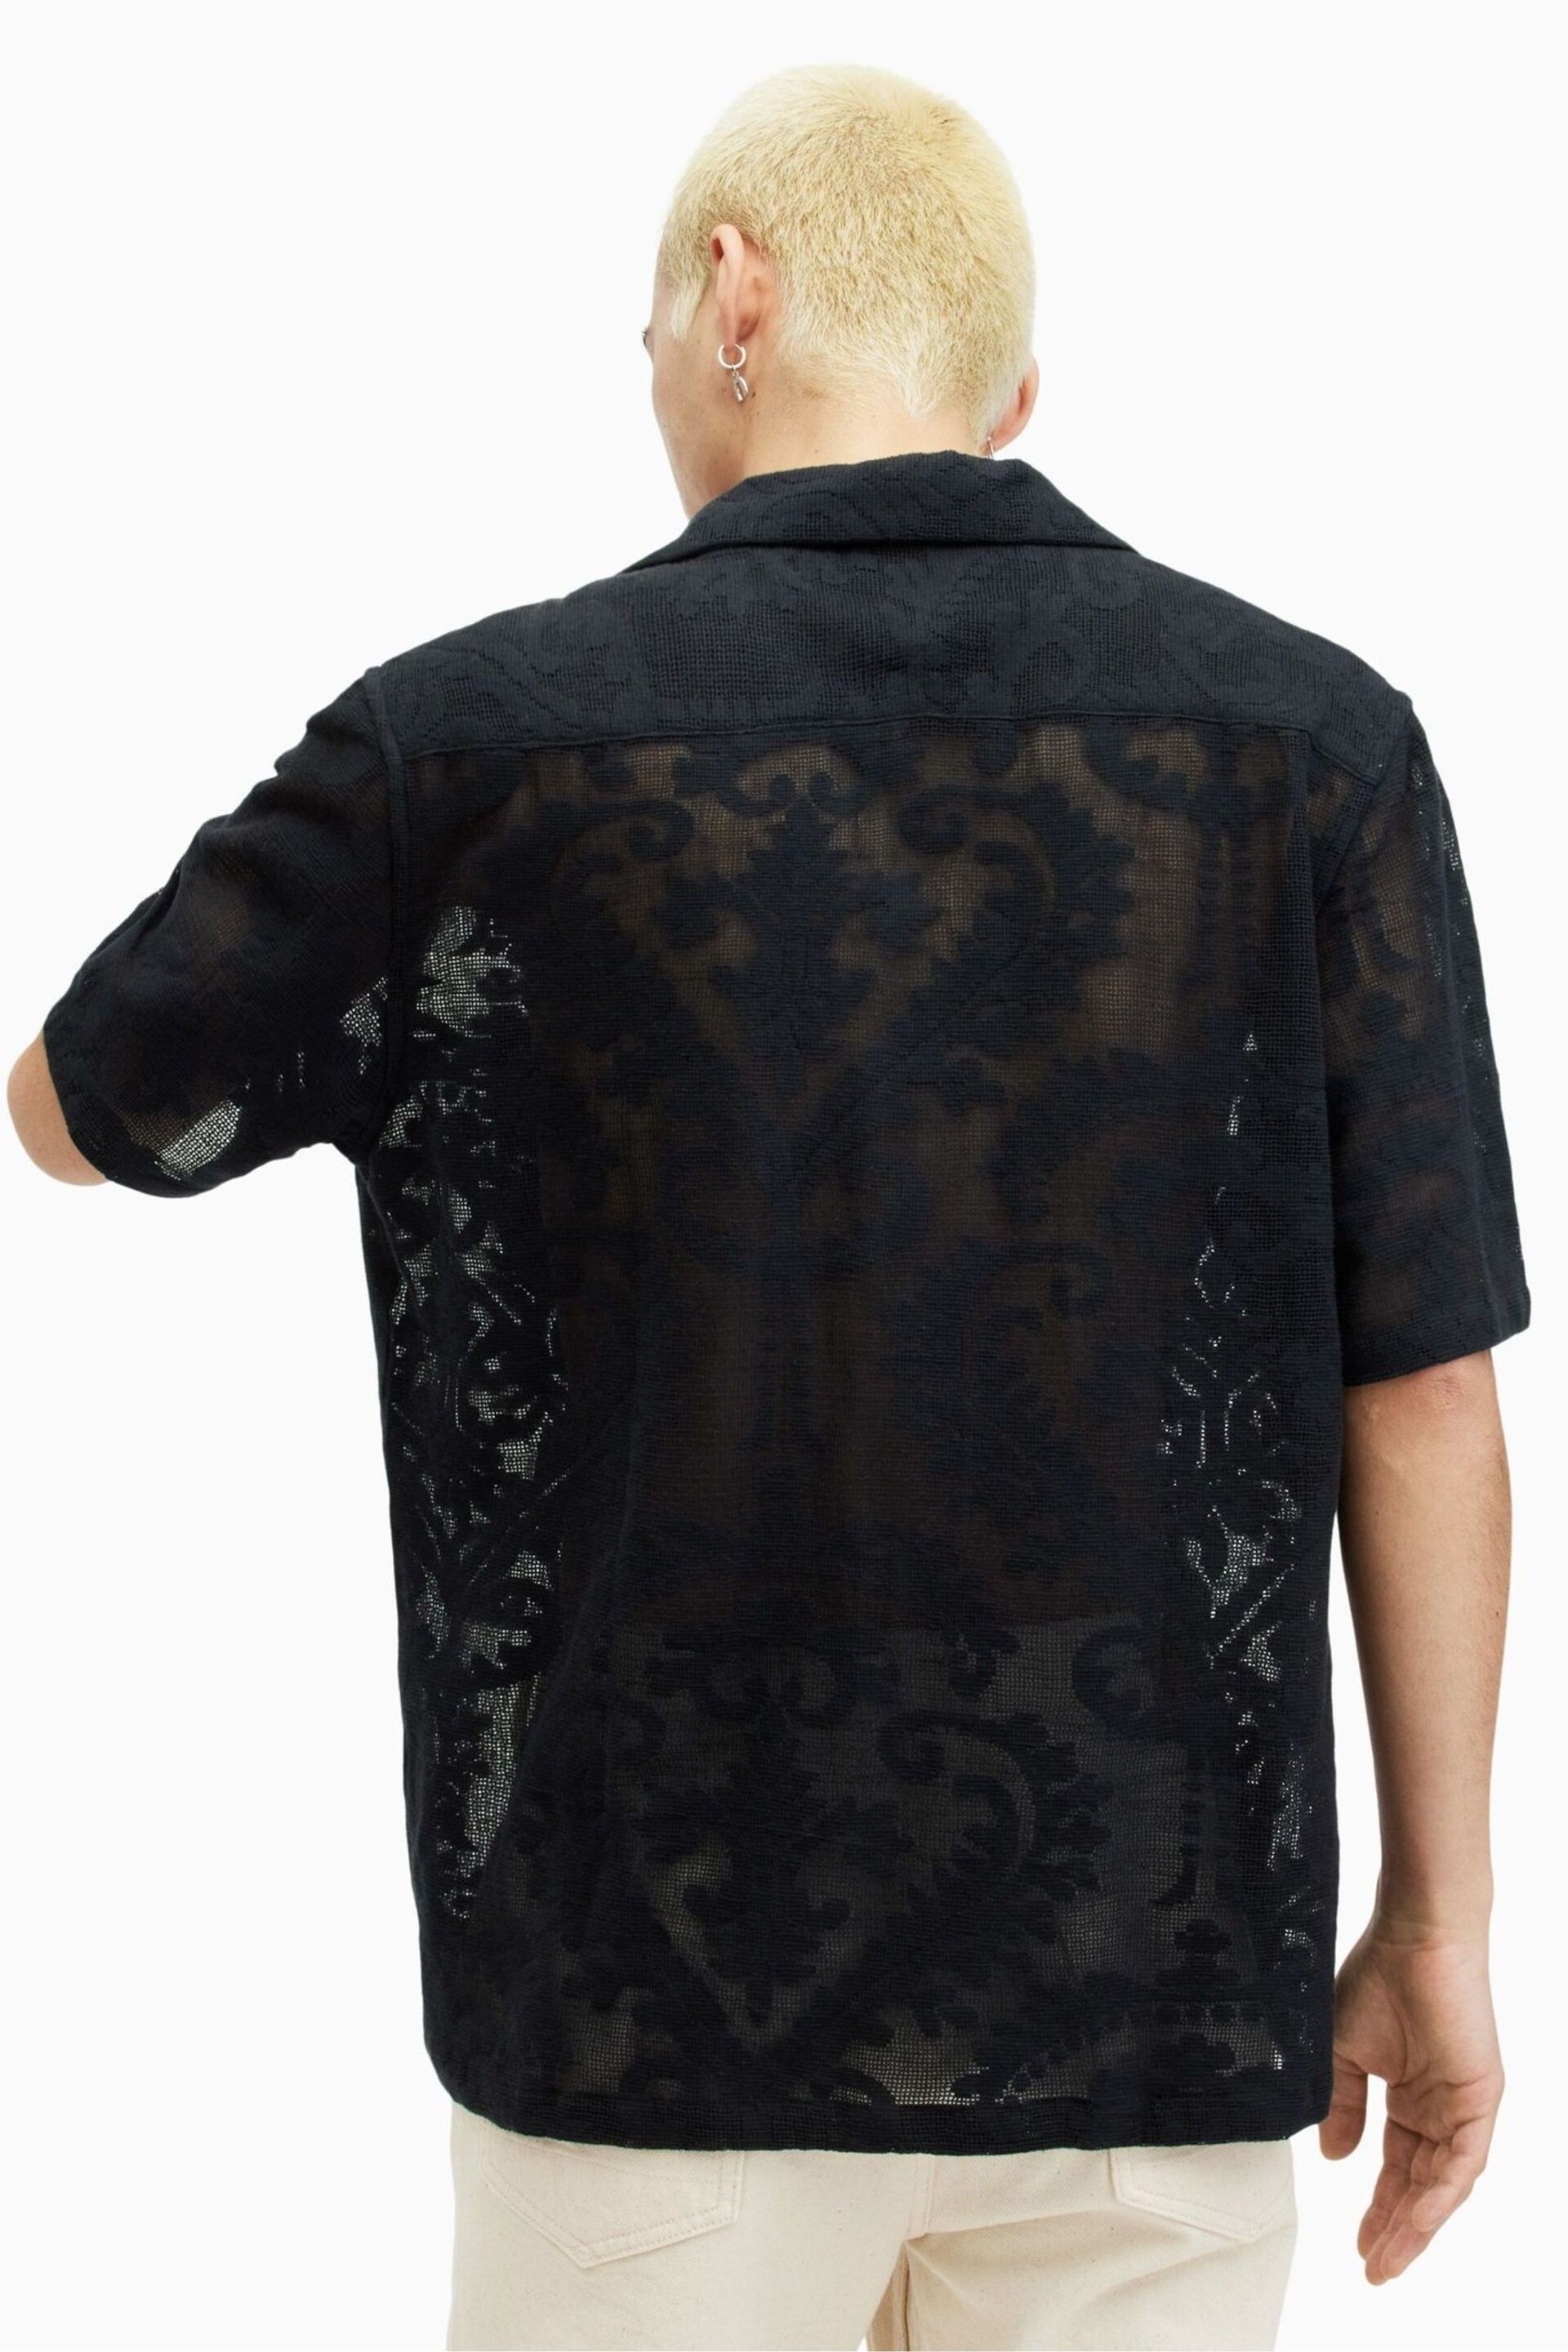 AllSaints Black Cerrito Short Sleeve Shirt - Image 2 of 8